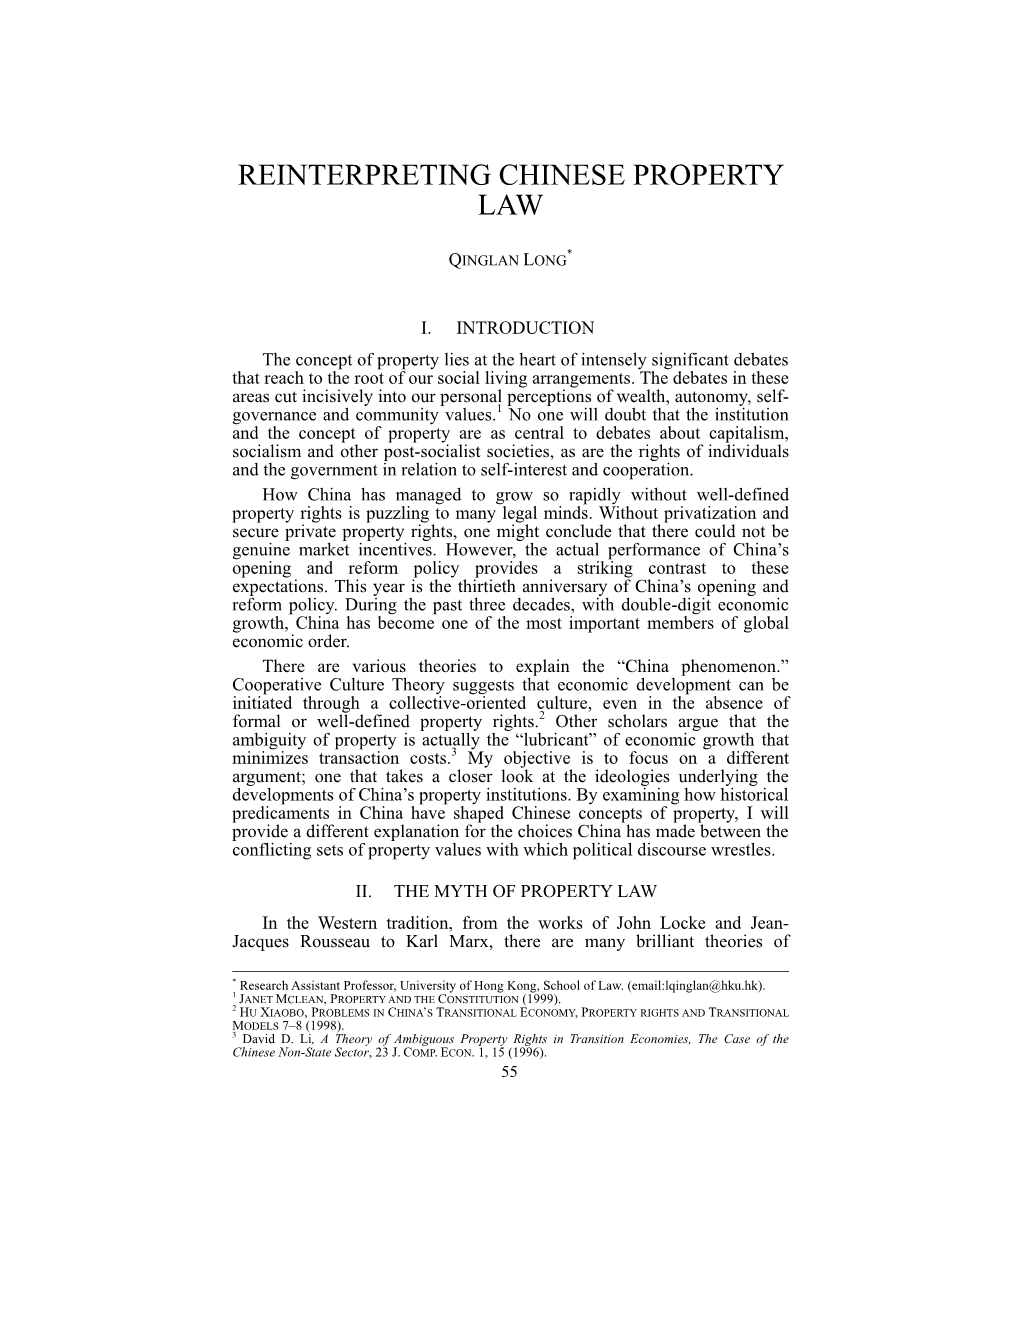 Reinterpreting Chinese Property Law